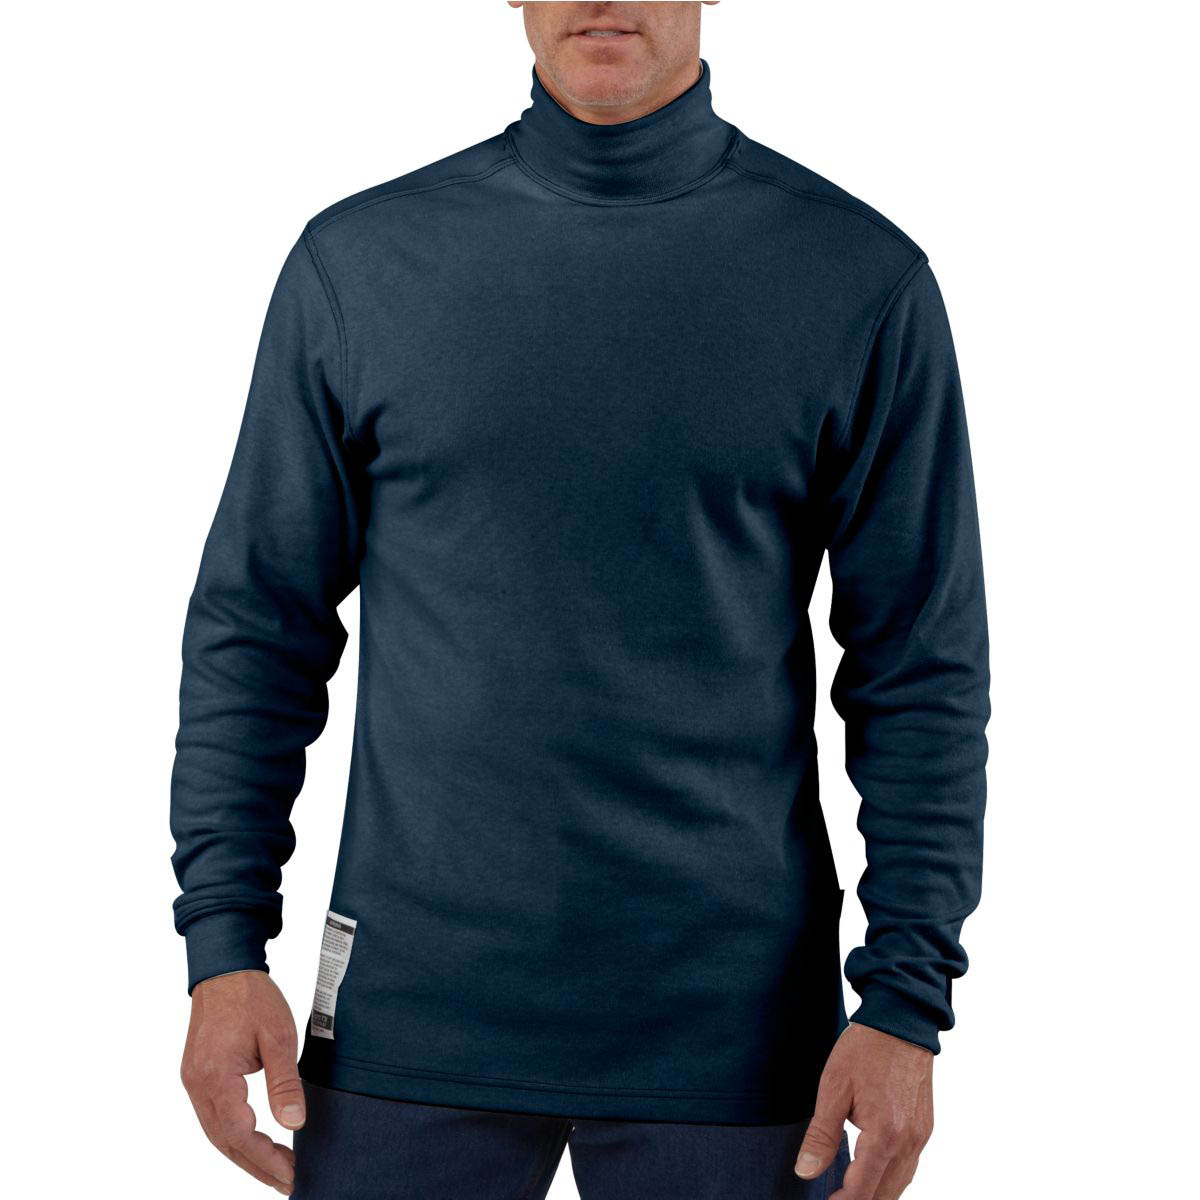 Carhartt Men's Flame Resistant Force Cotton Long Sleeve Mock Turtleneck